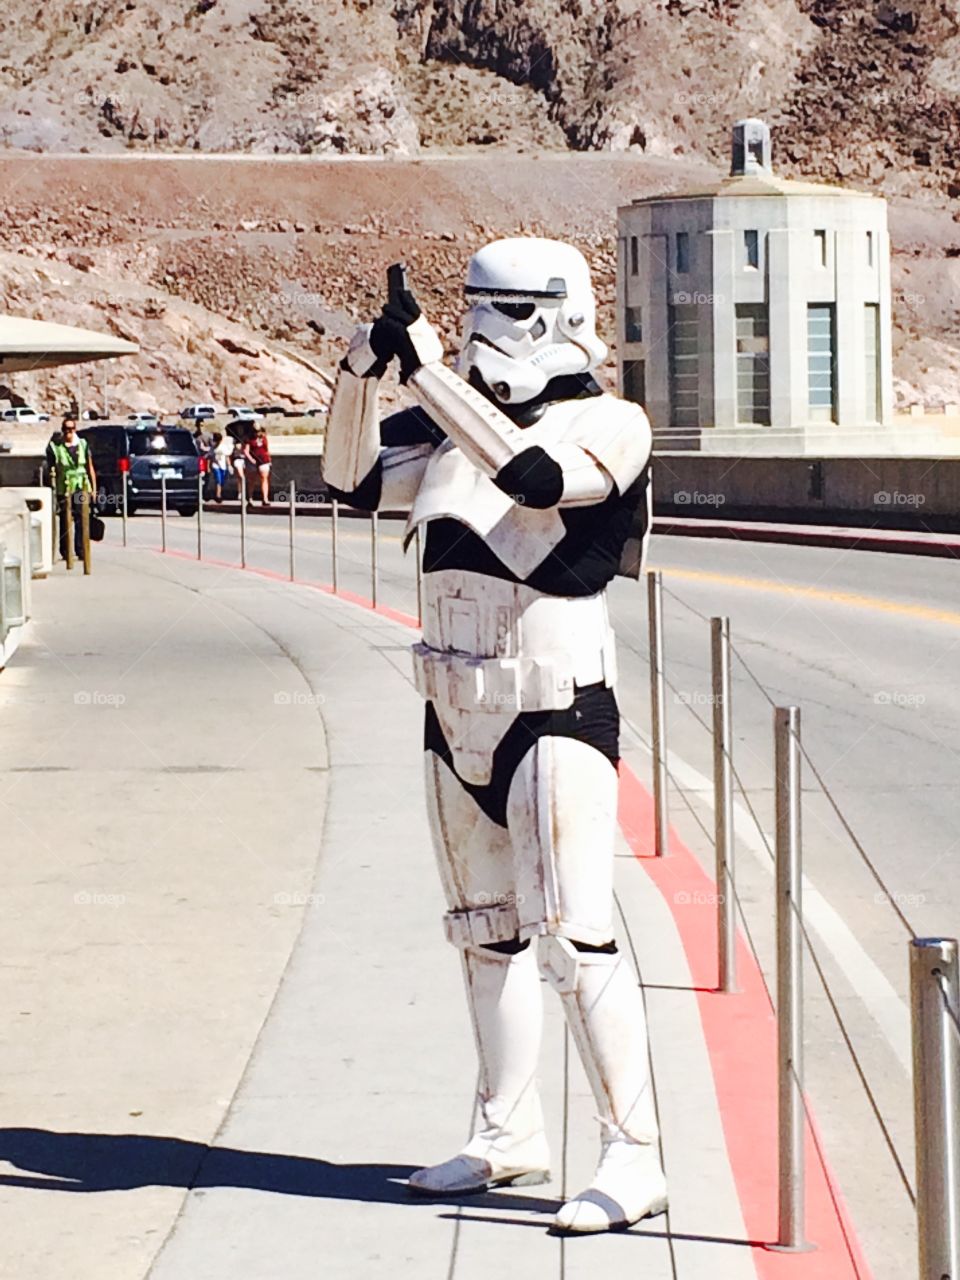 Storm Trooper at Hoover Dam 